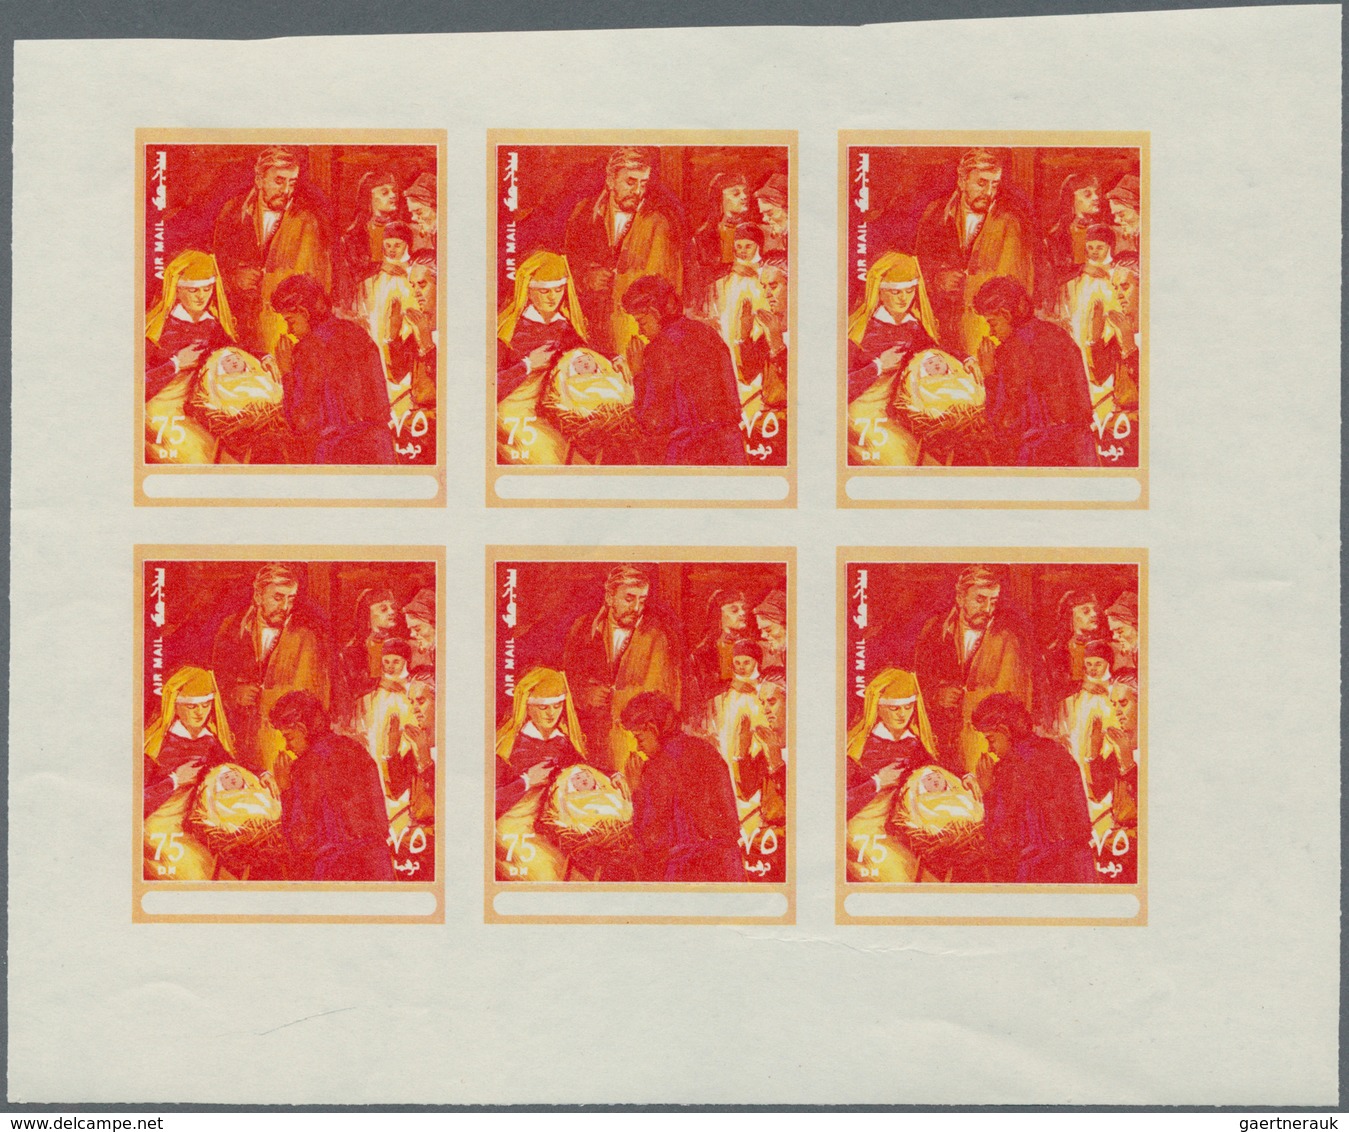 Thematik: Religion / religion: 1970, Fujeira. Progressive proof (7 phases) in miniature sheets of 6